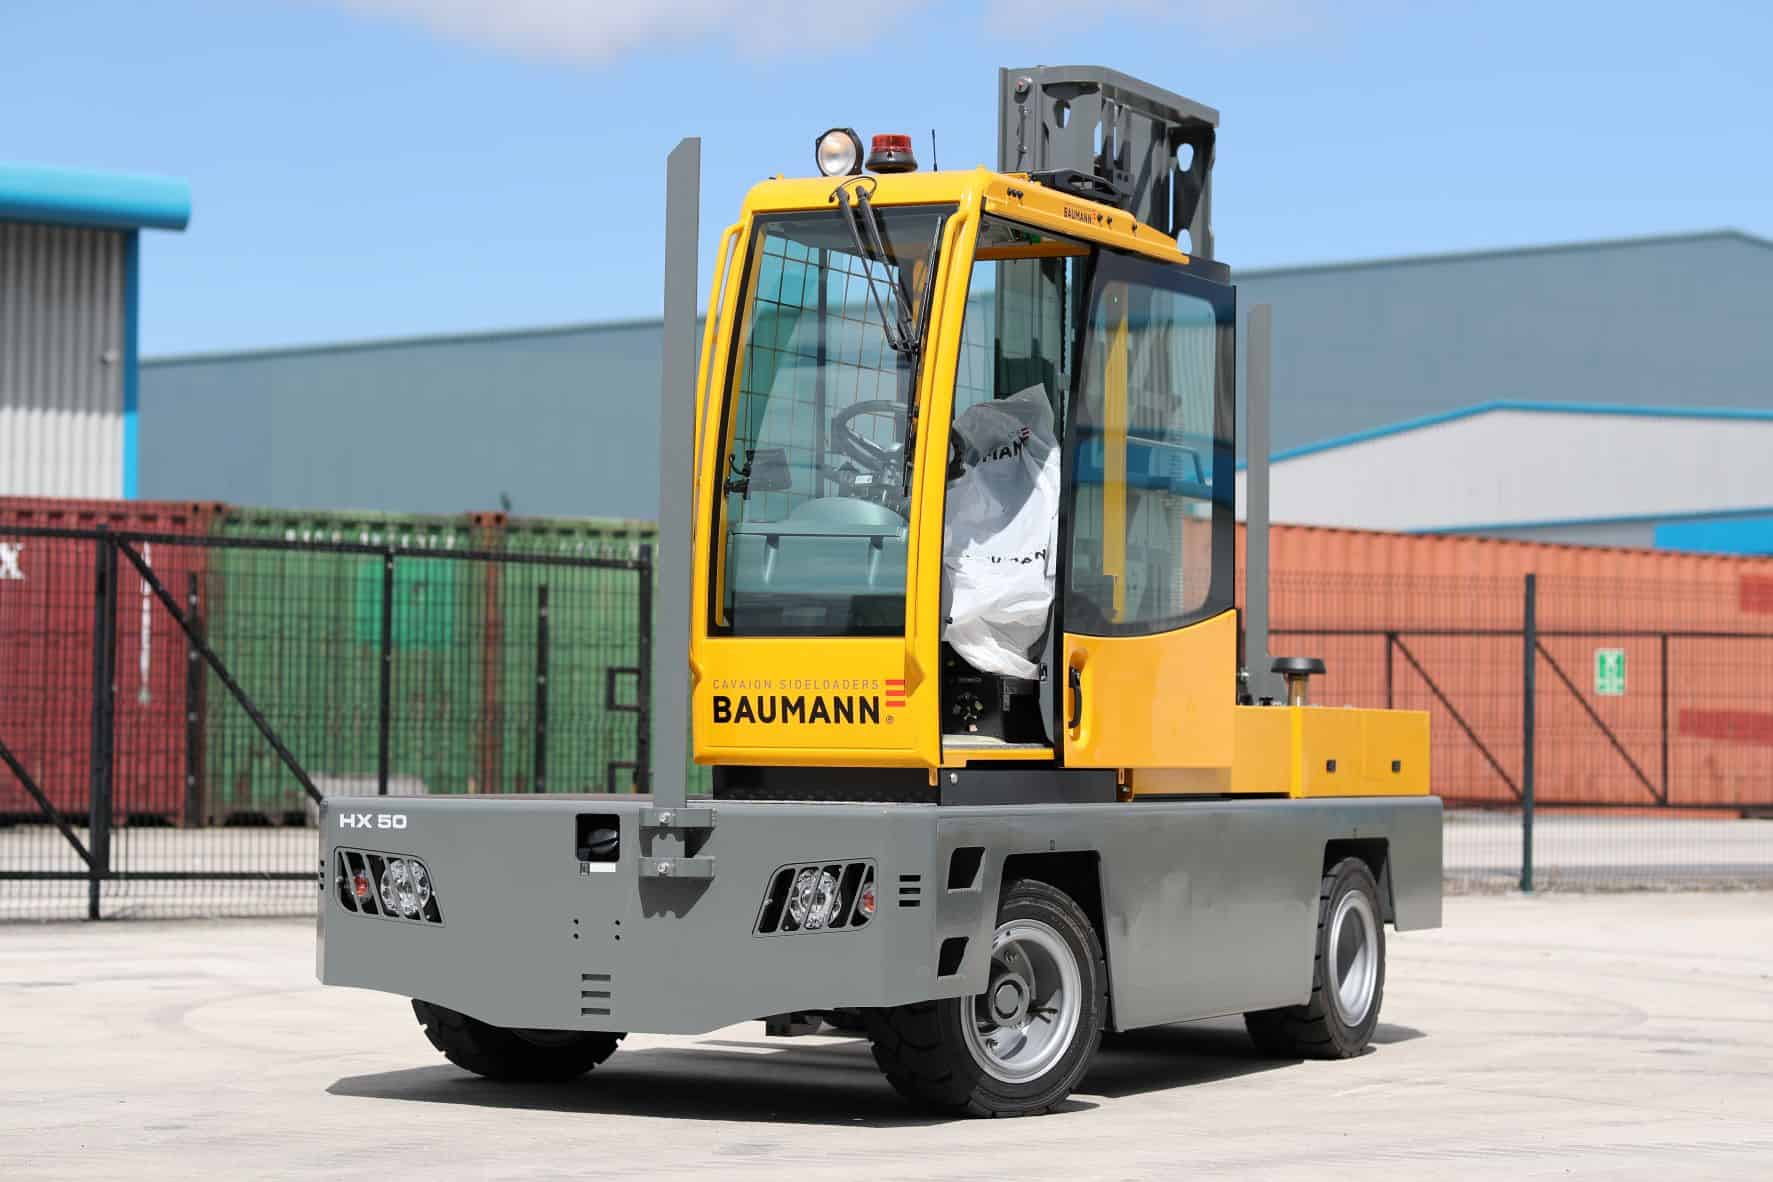 Baumann refurbished diesel sideloader